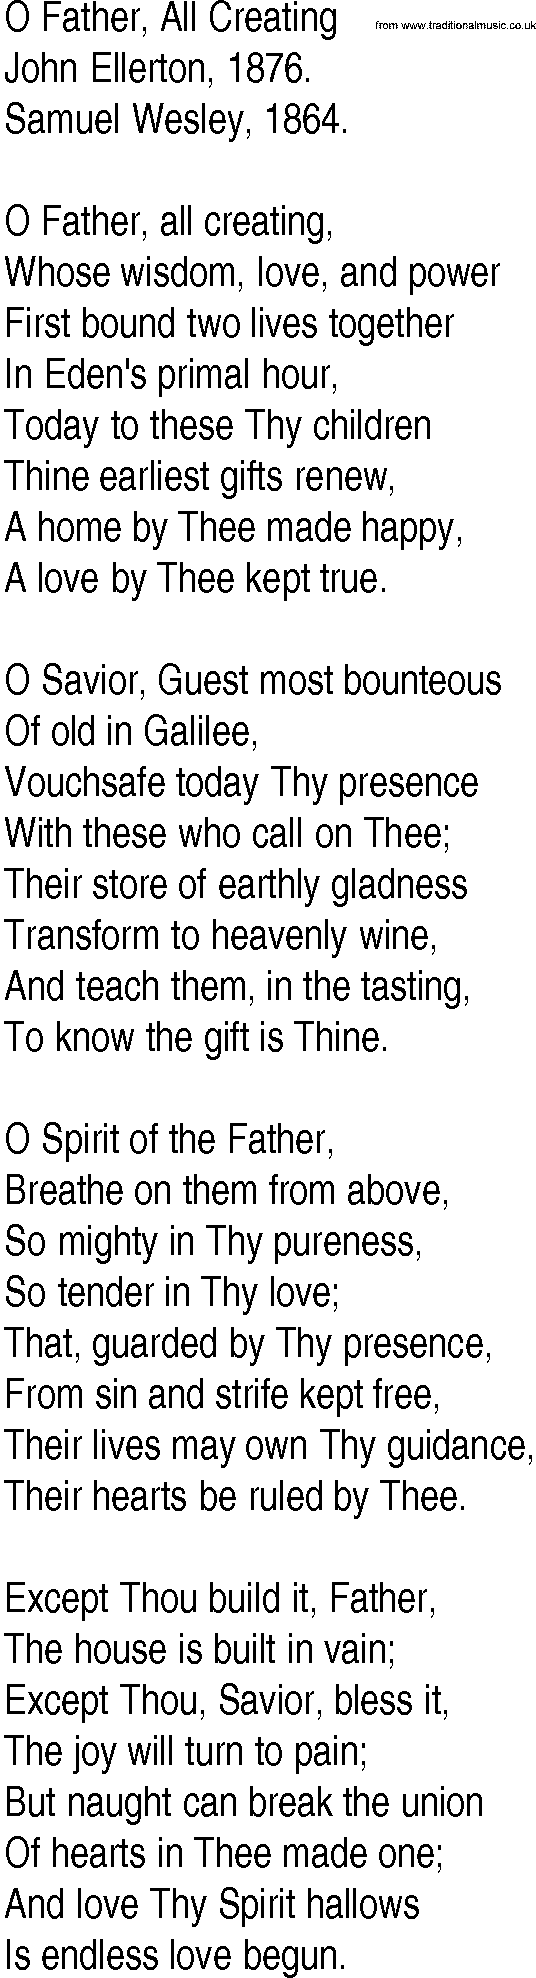 Hymn and Gospel Song: O Father, All Creating by John Ellerton lyrics